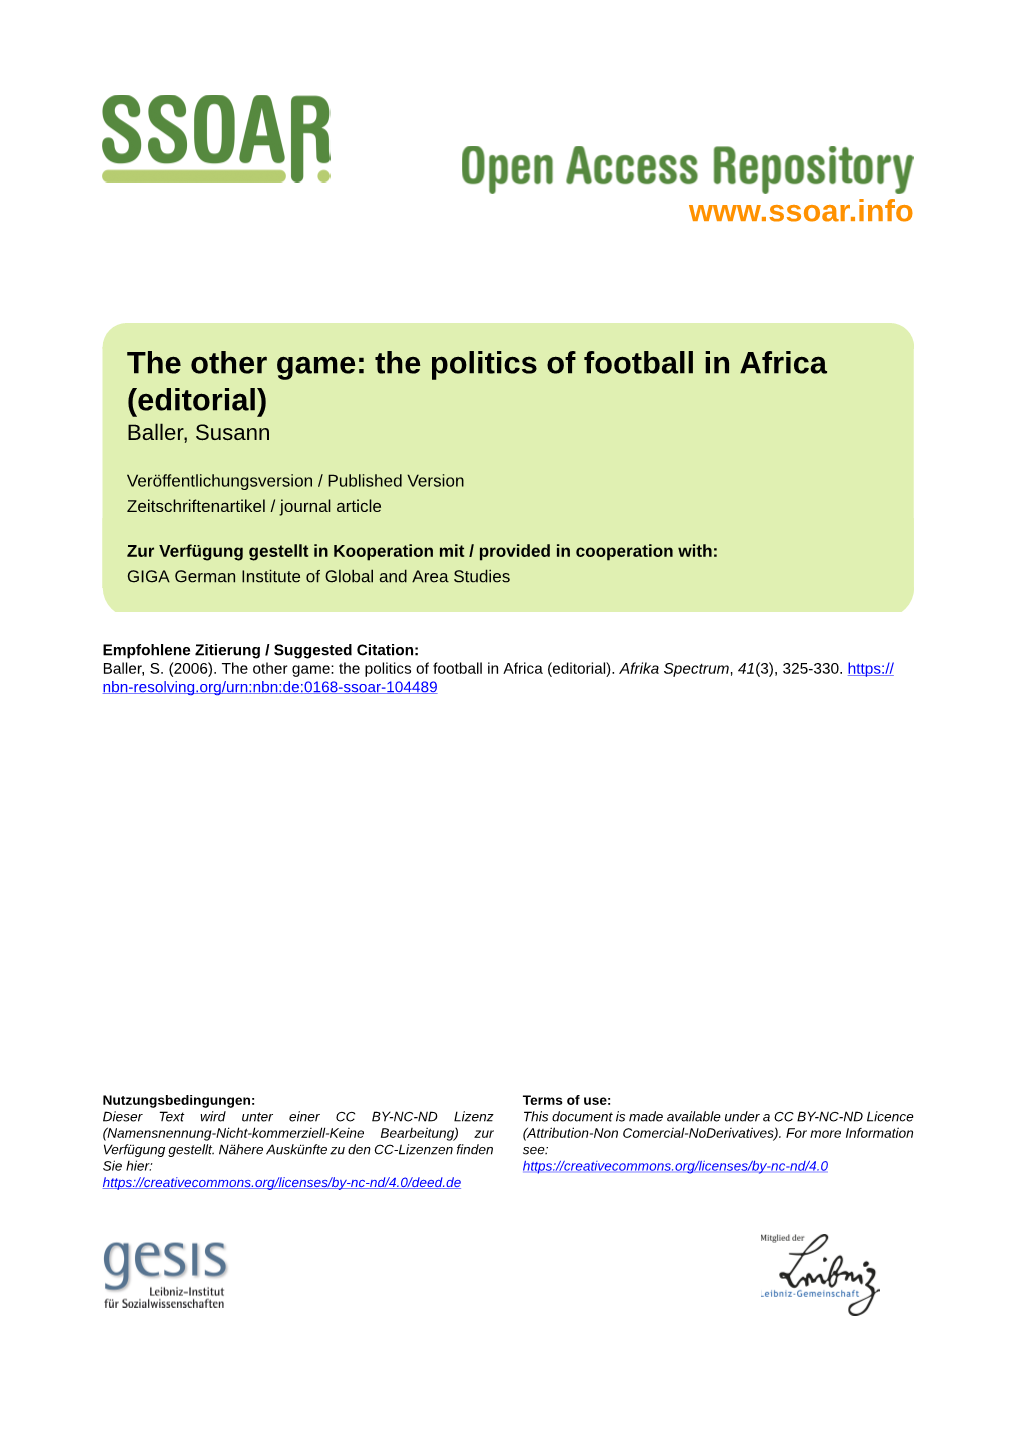 The Politics of Football in Africa (Editorial) Baller, Susann